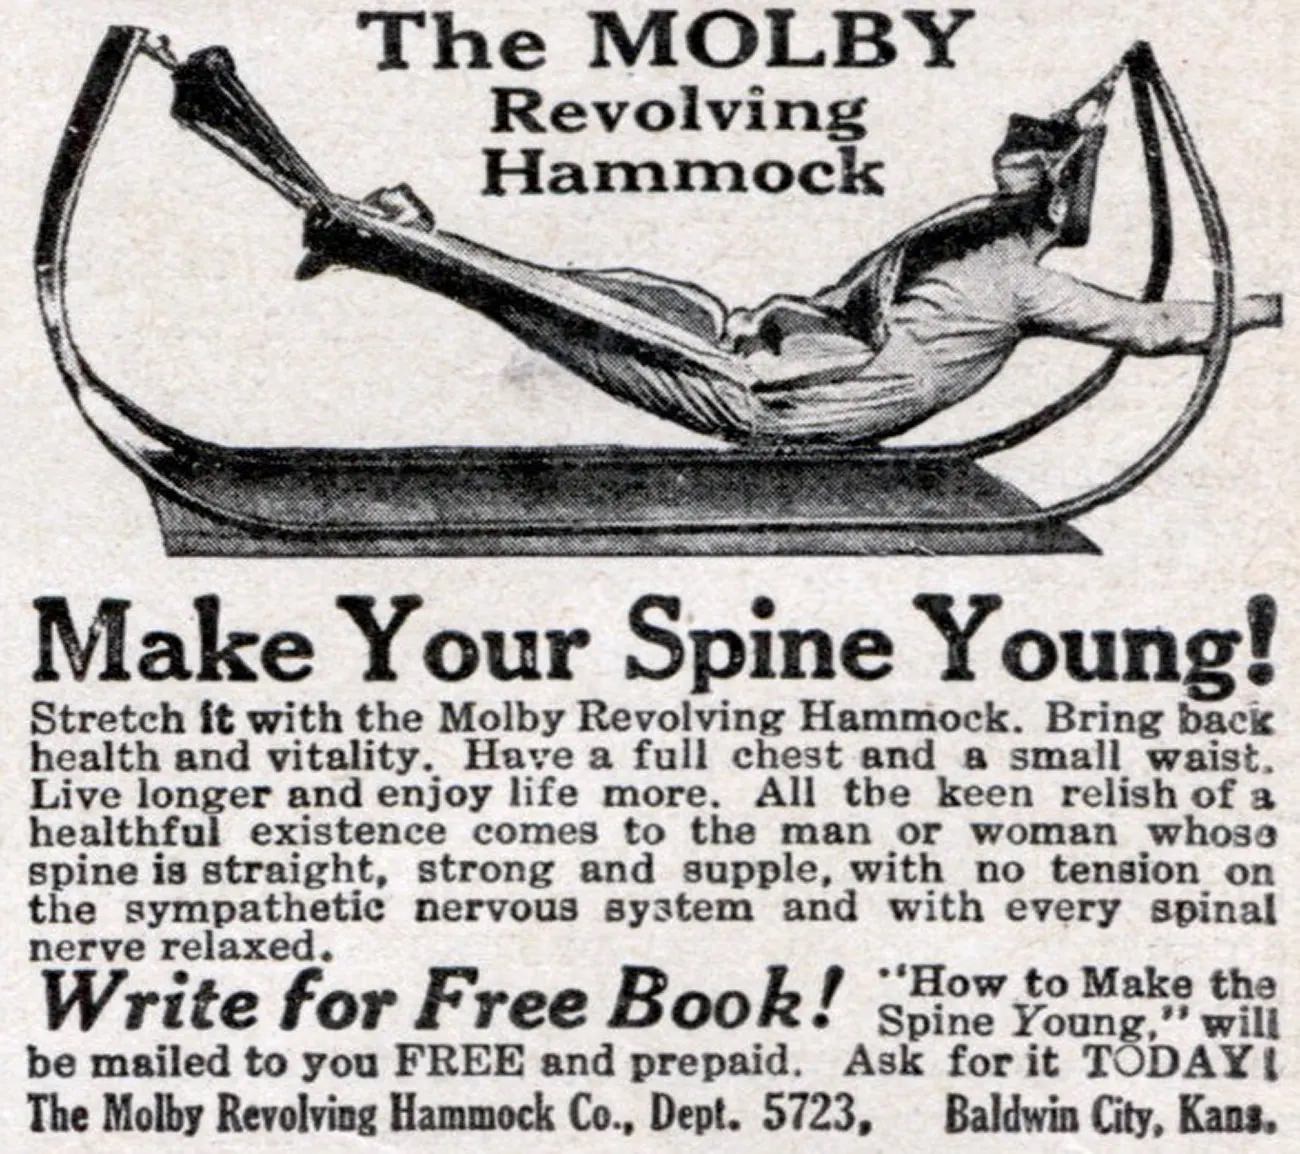 The Molby Revolving Hammock.